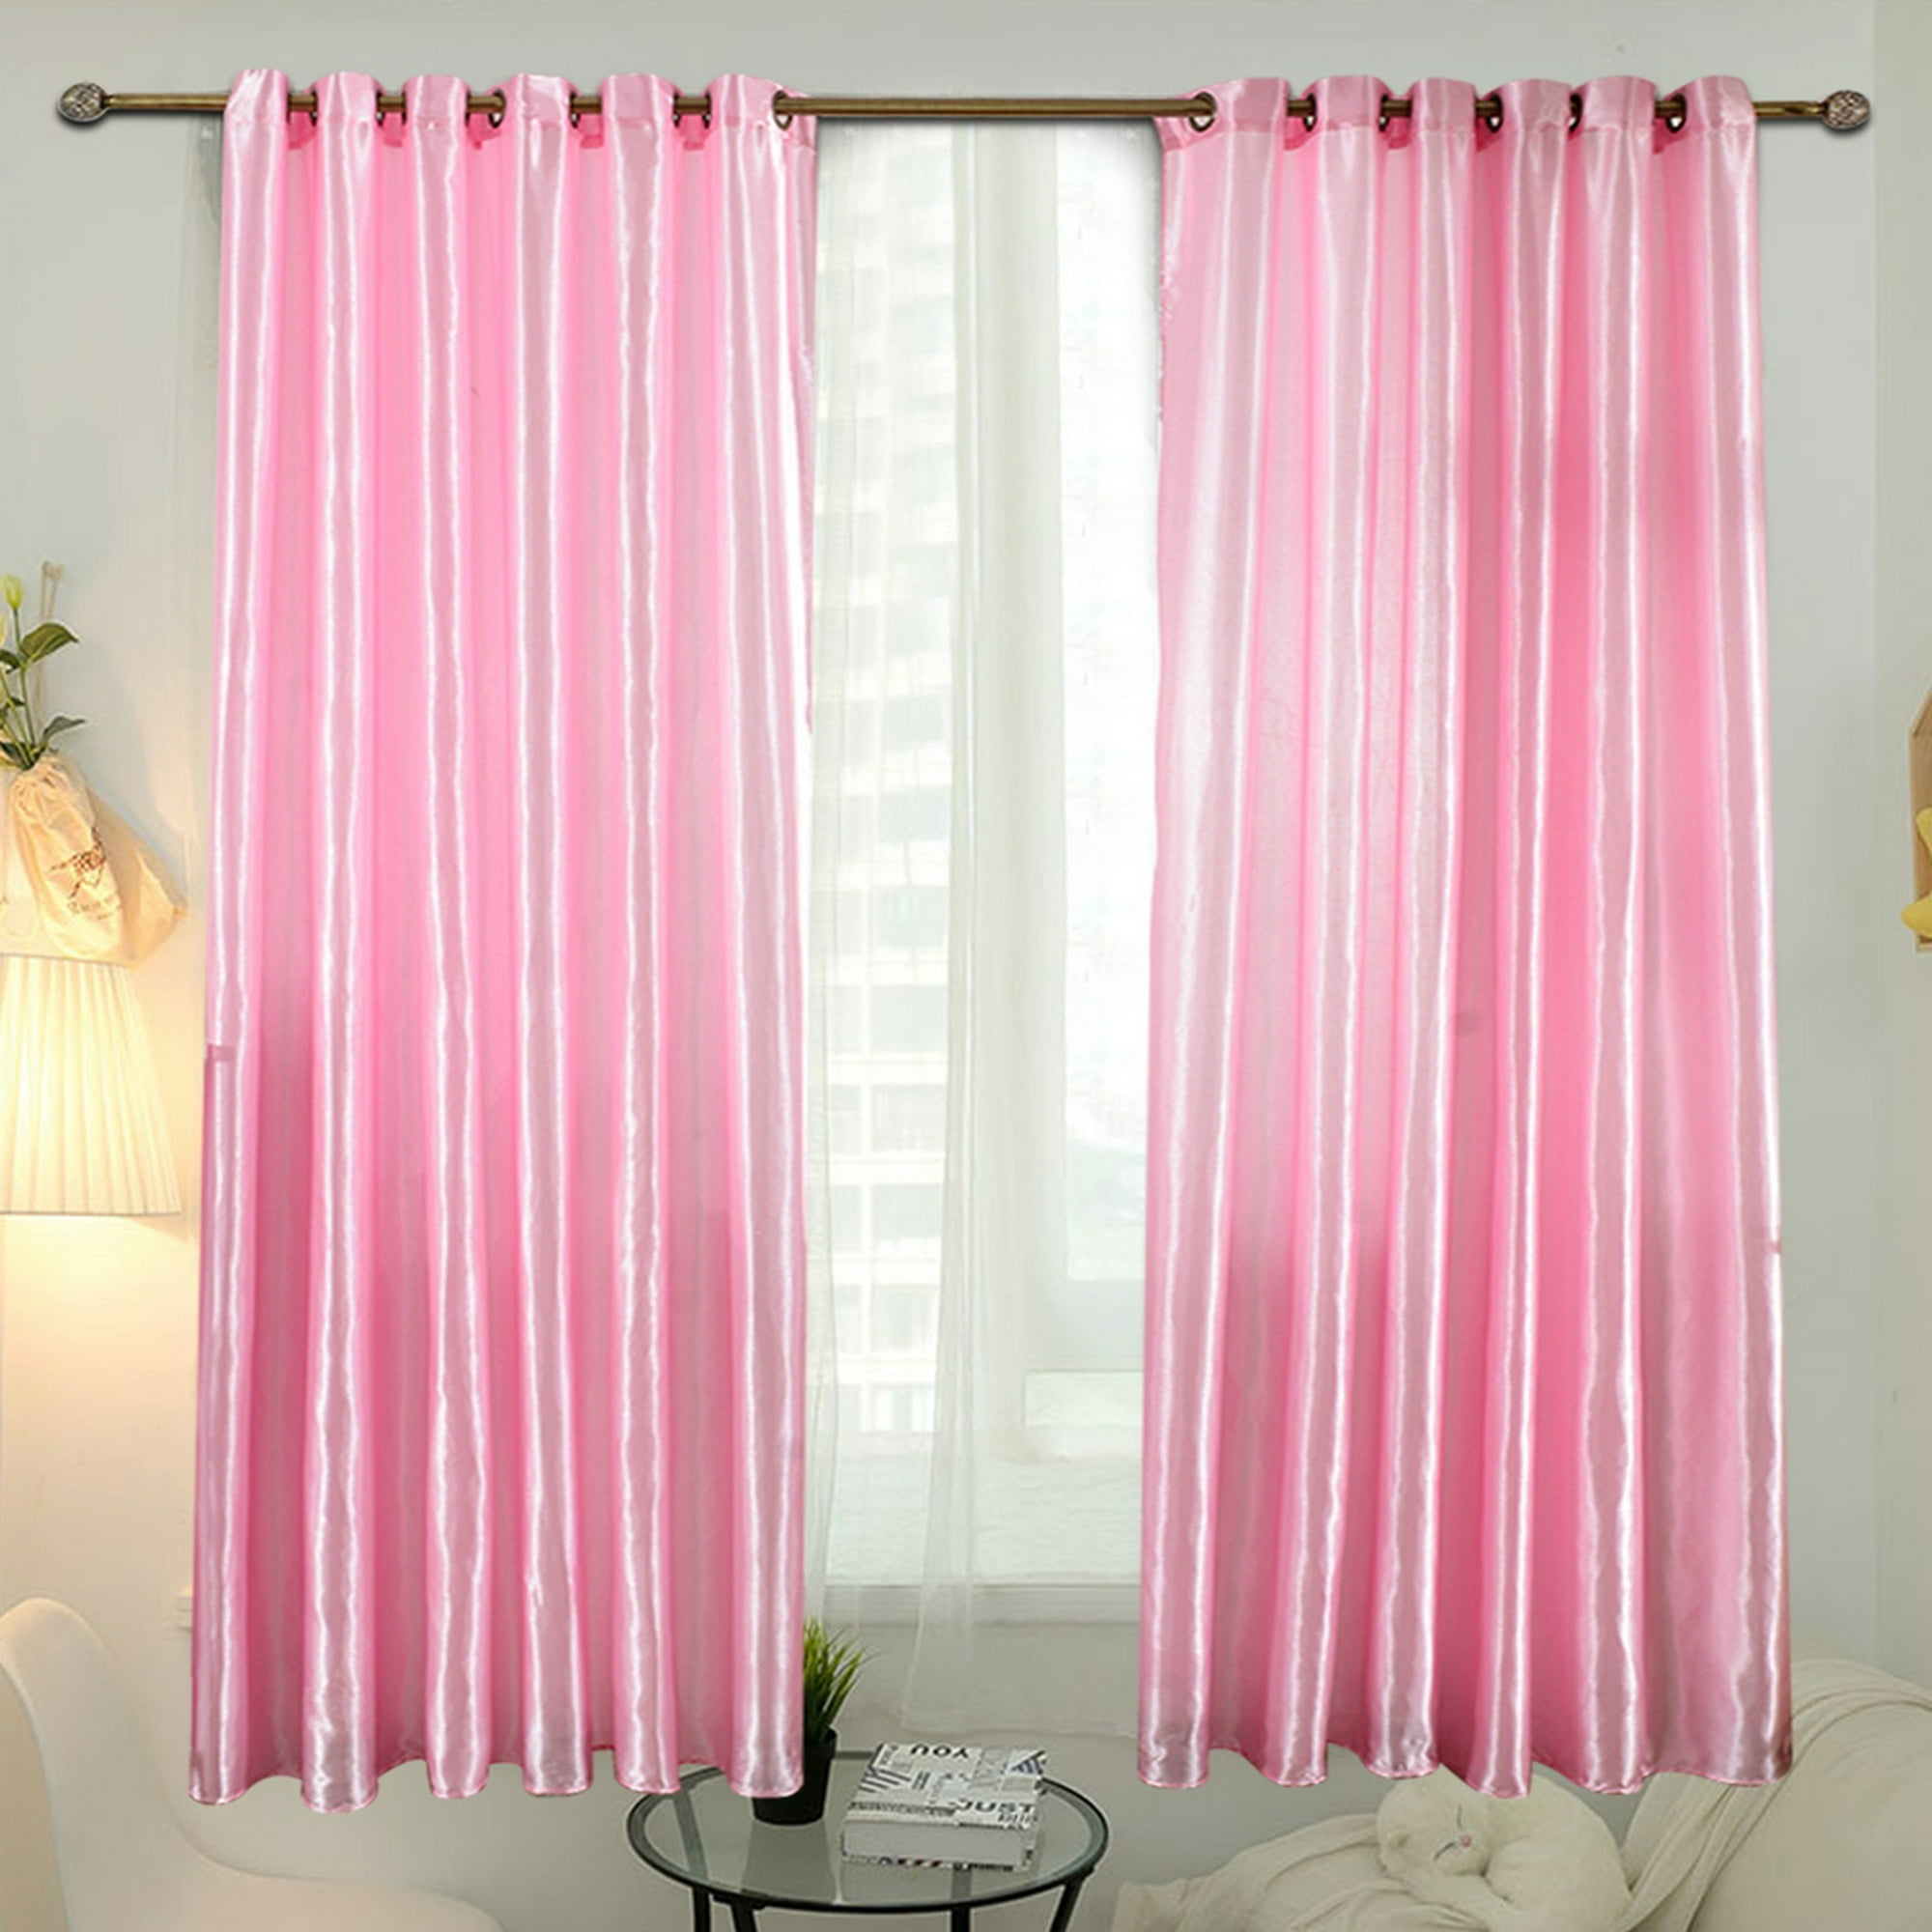 Cortinas para puerta de decoración de casa, cortinas de color marrón rosa,  decoración de comedor, 1 panel, 63 pulgadas de ancho x 87 pulgadas de alto